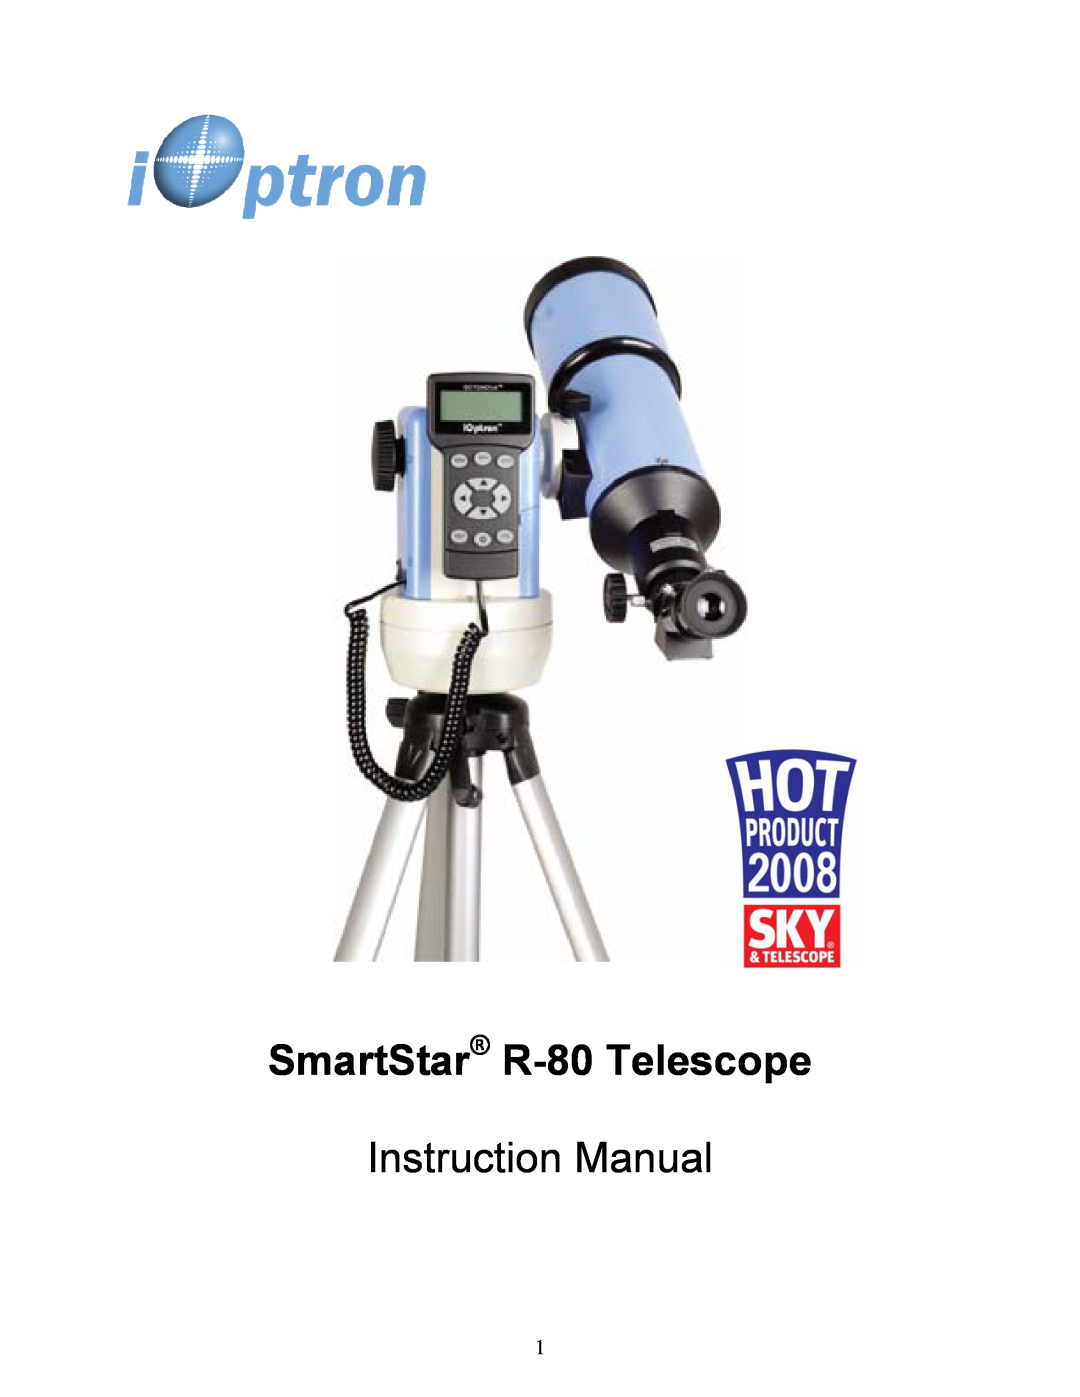 iOptron 8405 instruction manual SmartStar R-80Telescope 